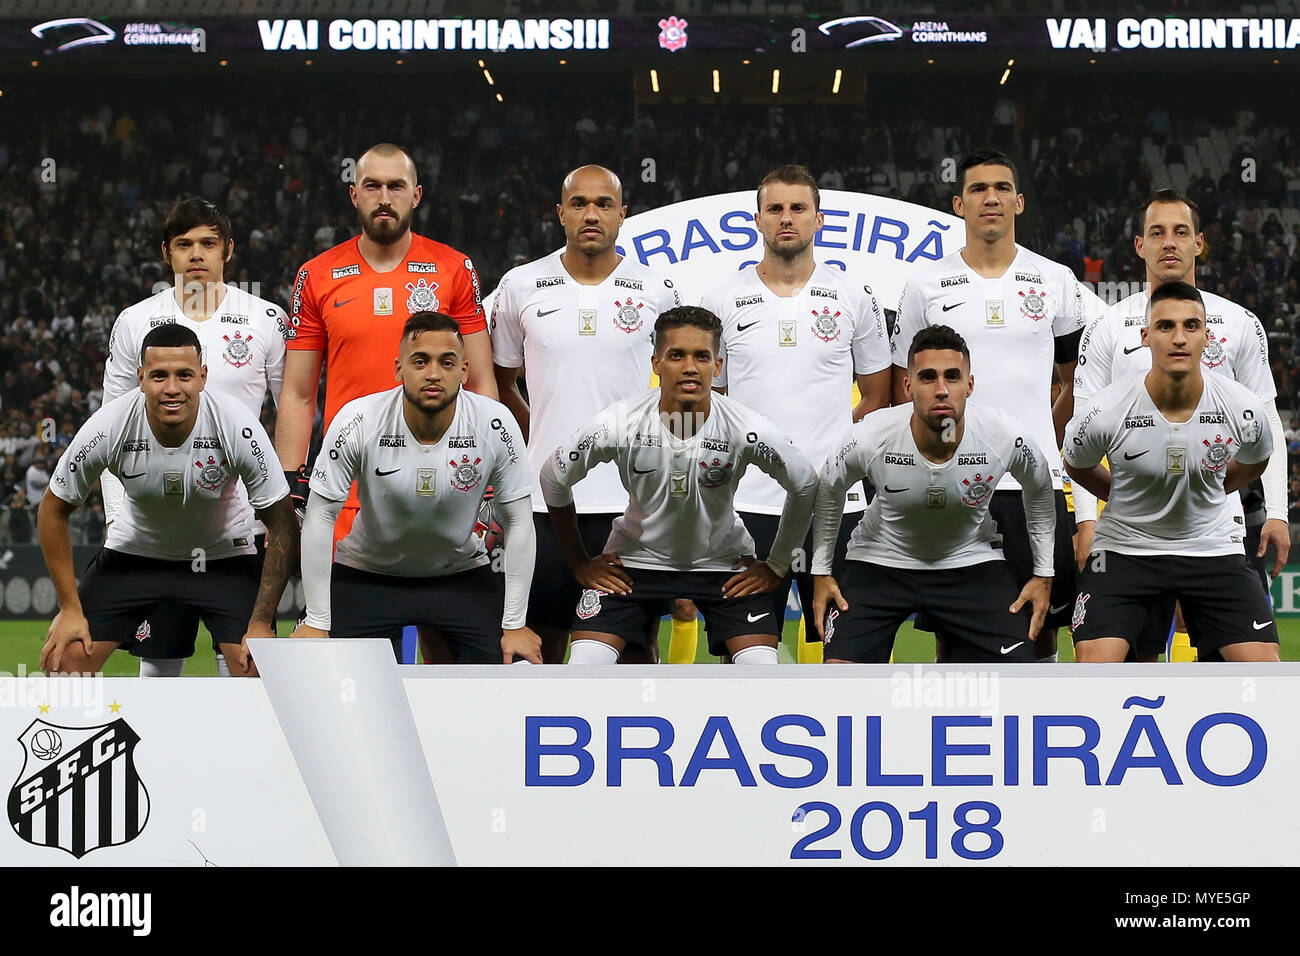 SÃO PAULO, SP - 06.06.2018: CORINTHIANS X SANTOS - Corinthians team during  the match between Corinthians and